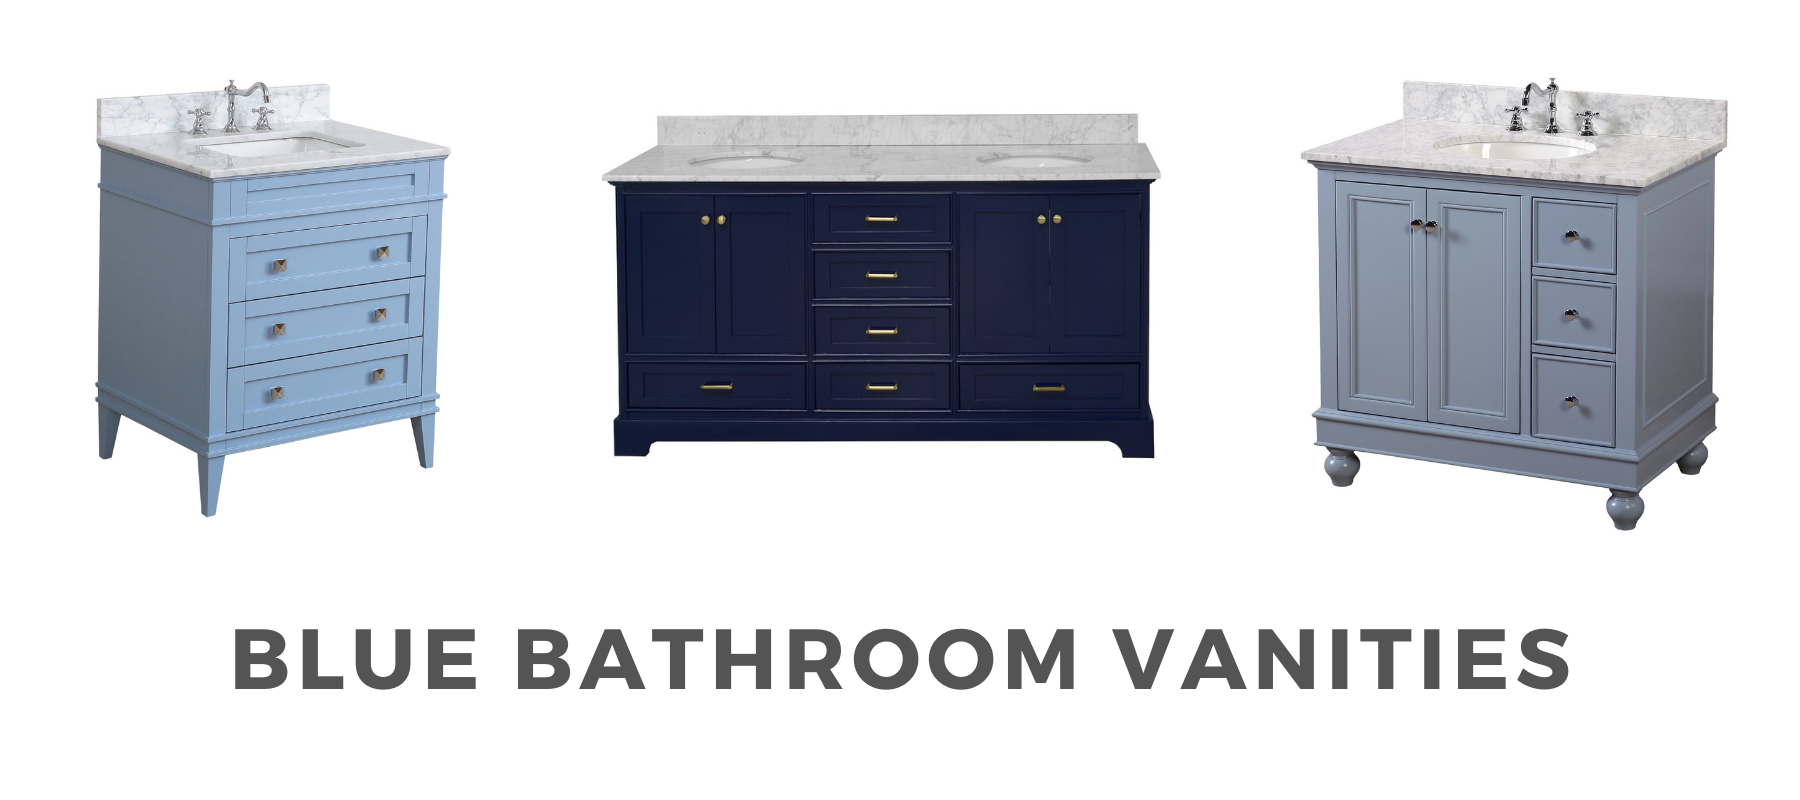 Most Popular Bathroom Vanity Color Blue